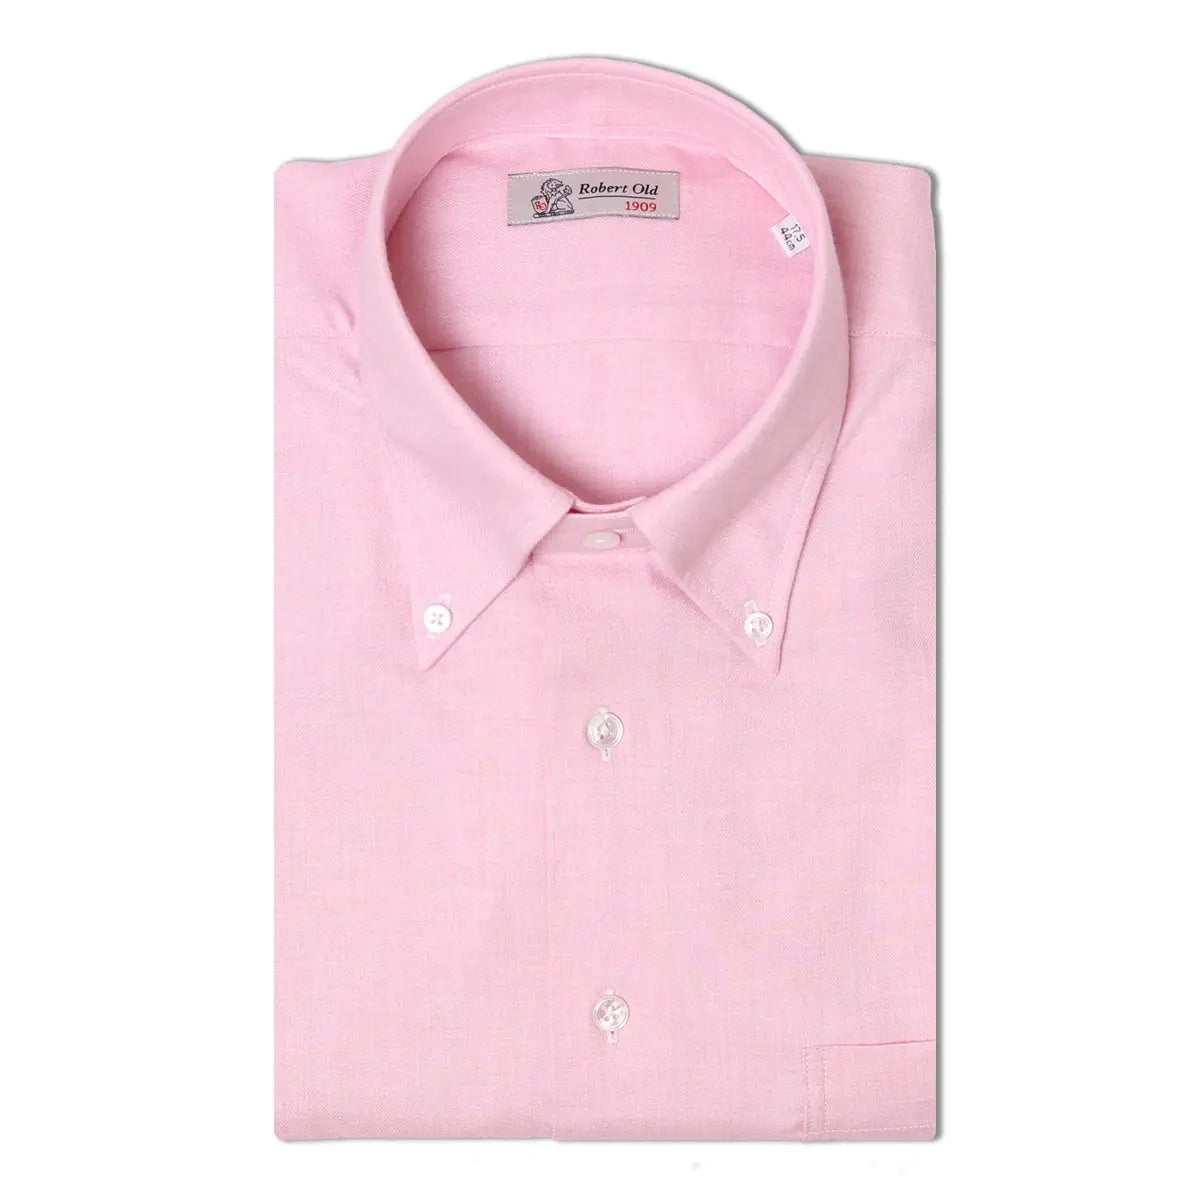 Rose Quartz Pink Cashmerello Long Sleeve Shirt  Robert Old   